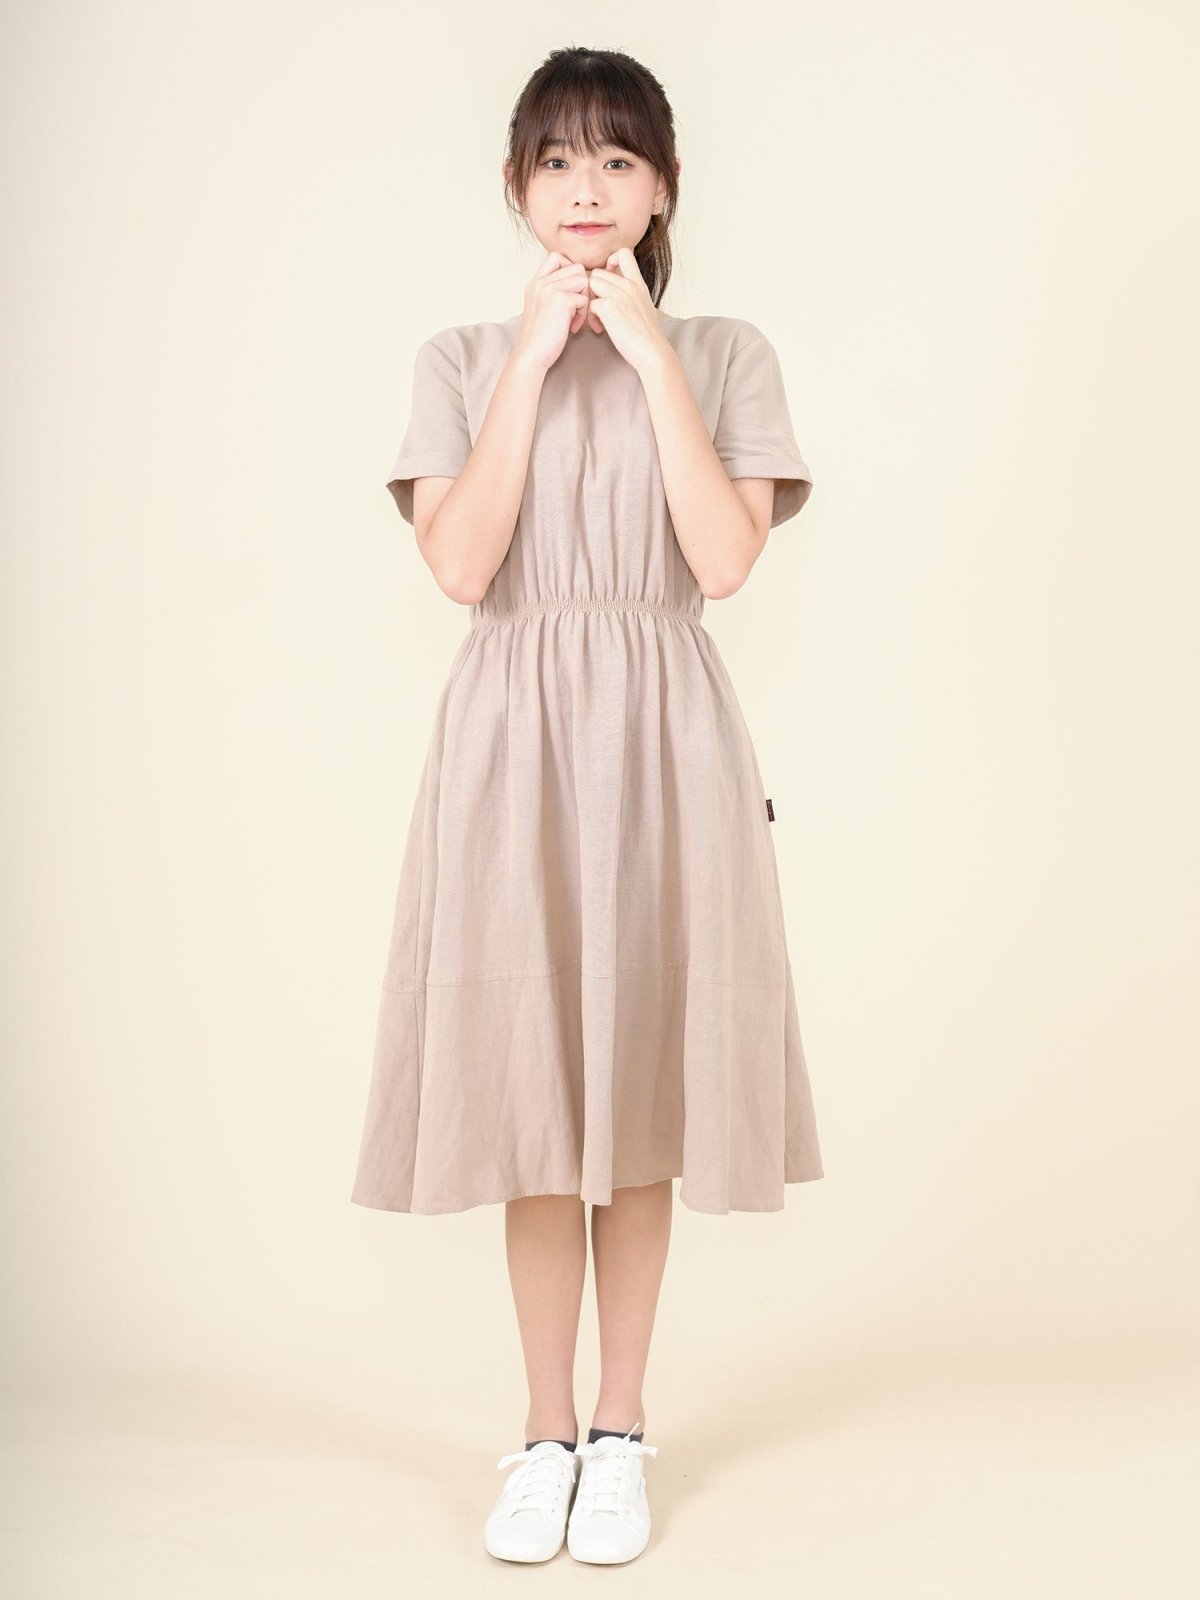 Lanna Elastic Waist Short Sleeve Dress - DAG-DD9449-22CreamF - Beige - F - D'ZAGE Designs